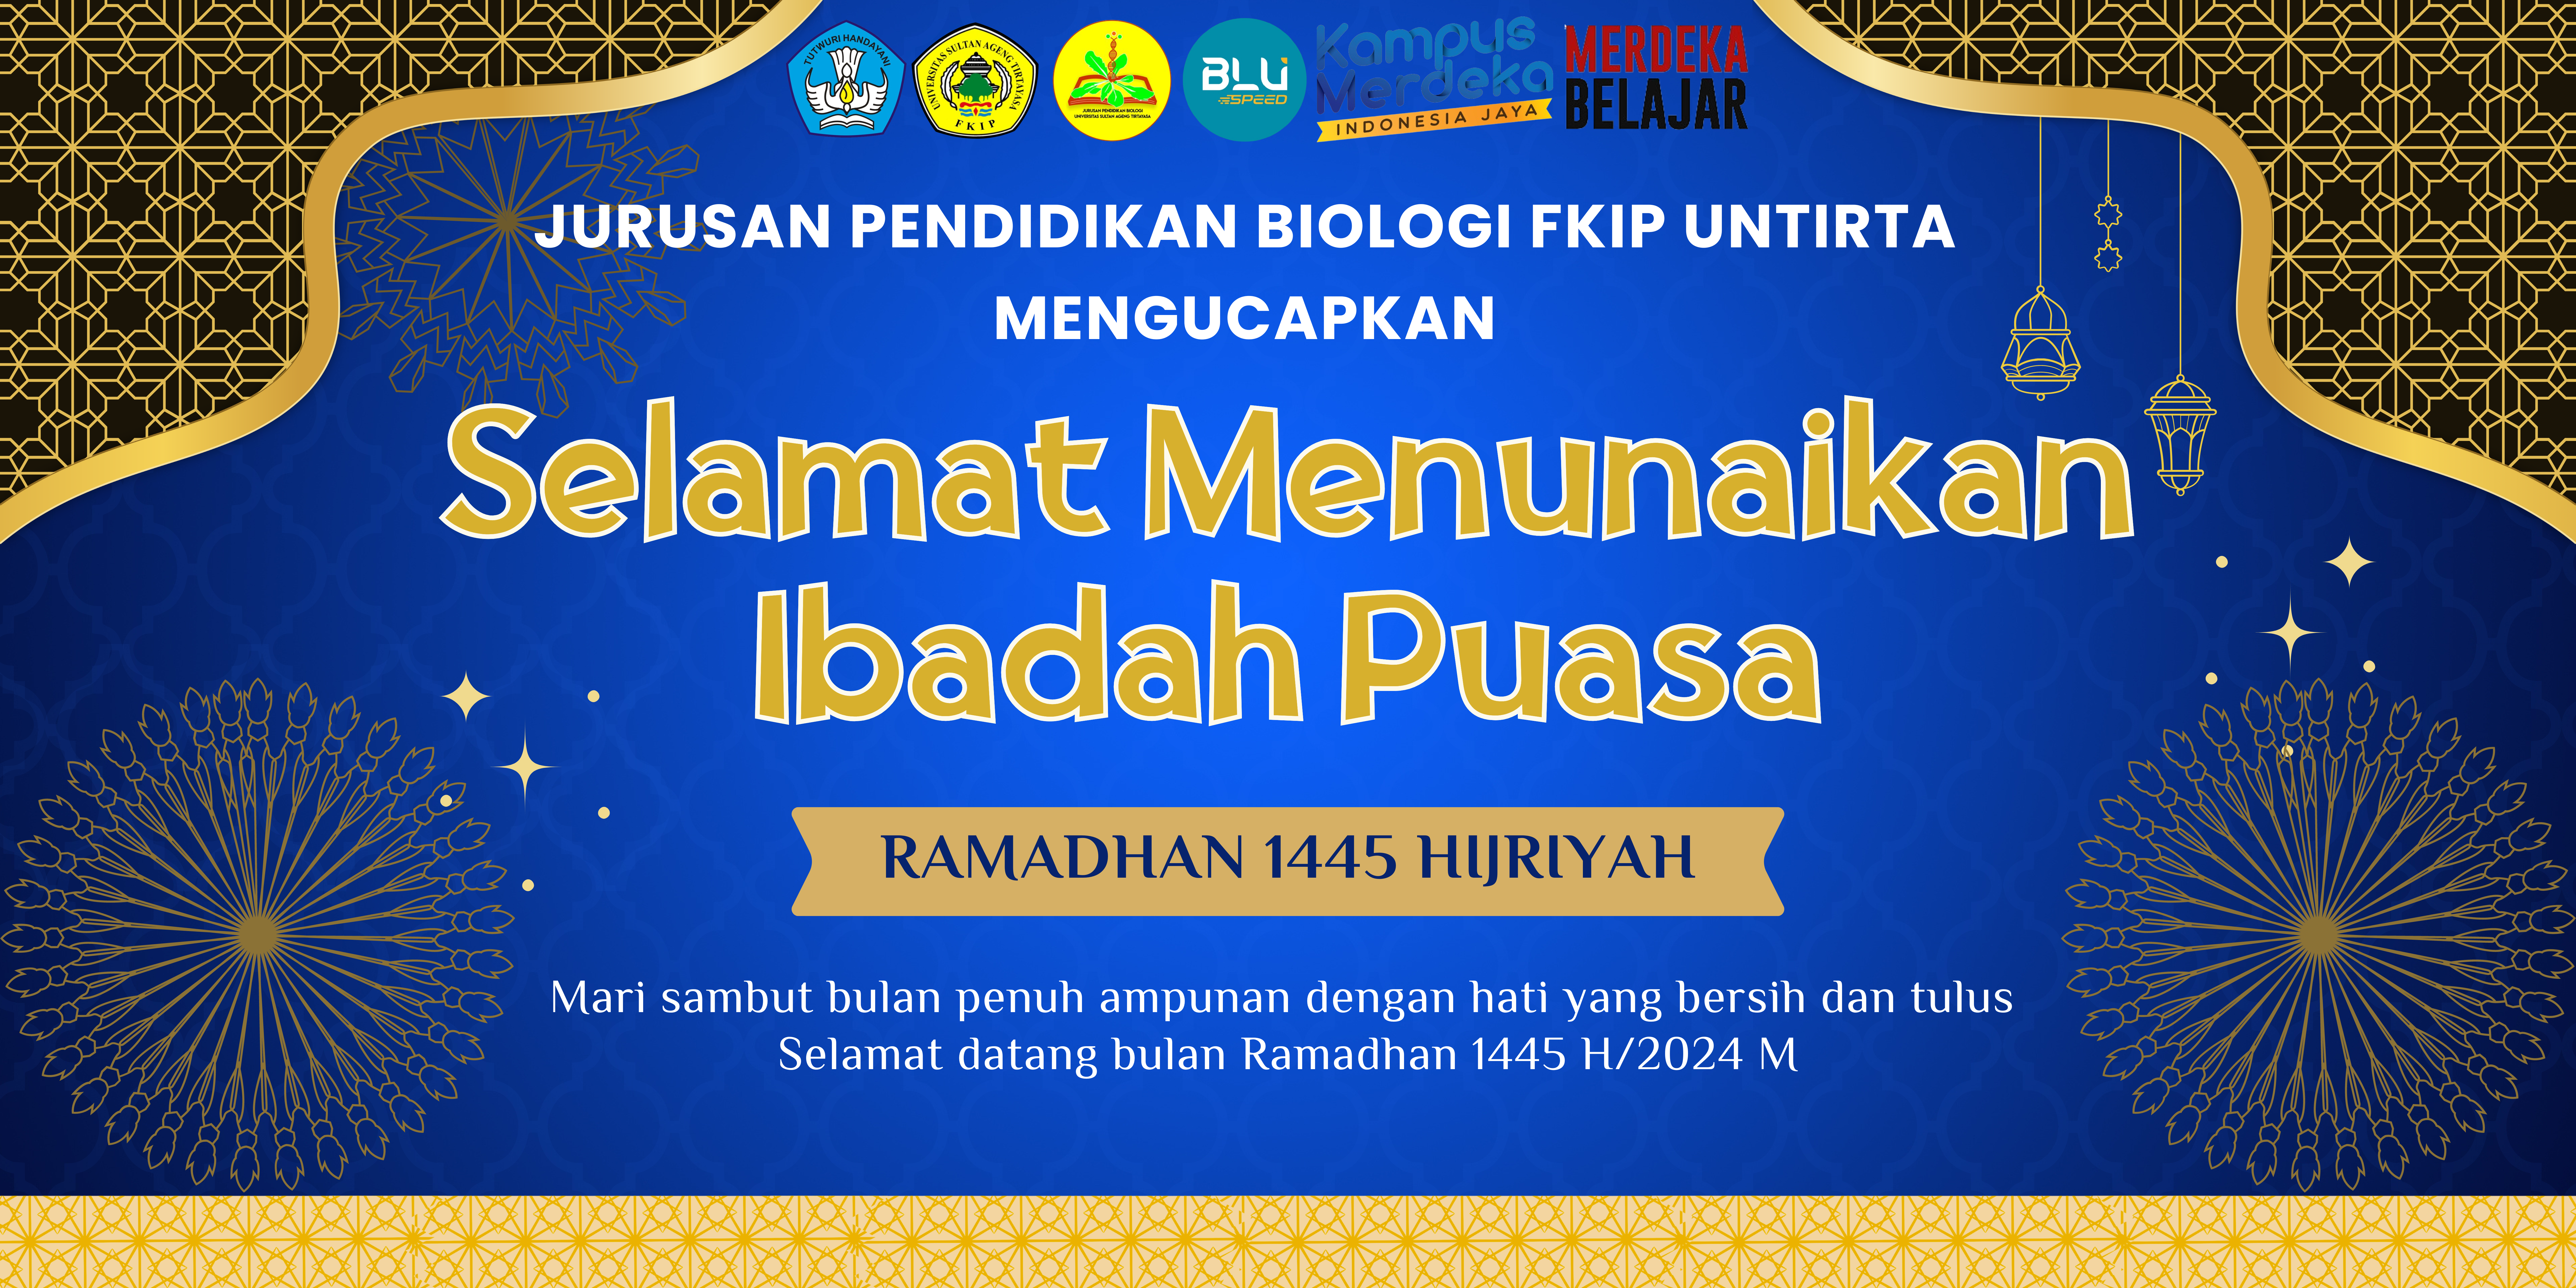 Marhaban ya Ramadhan 1445 H/2024 M